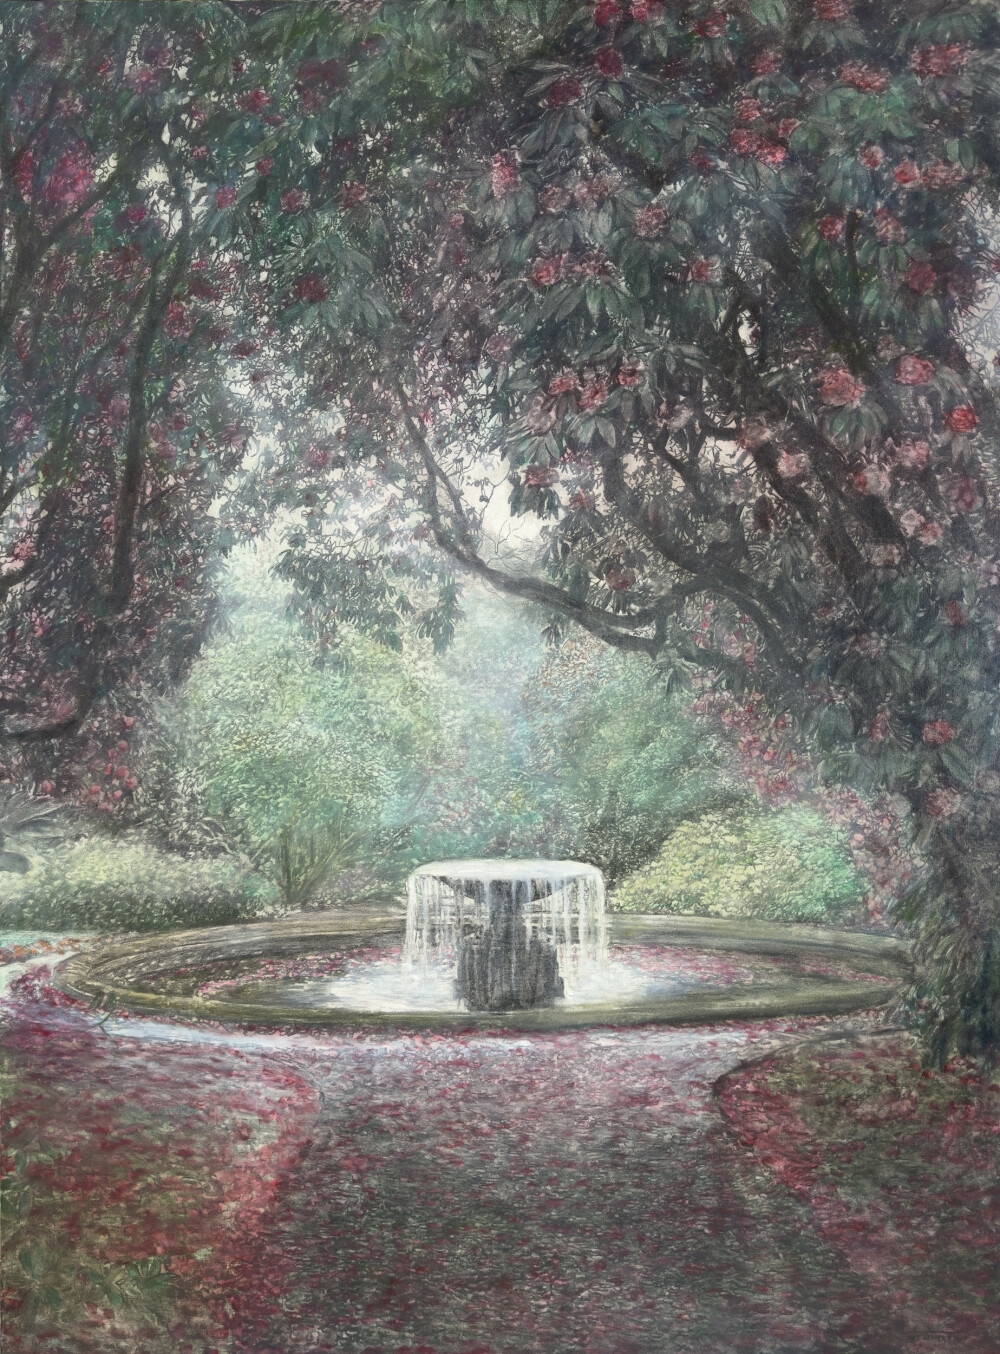 Fountain in Holker Hall, Cumbria (1987) by Piet Bekaert